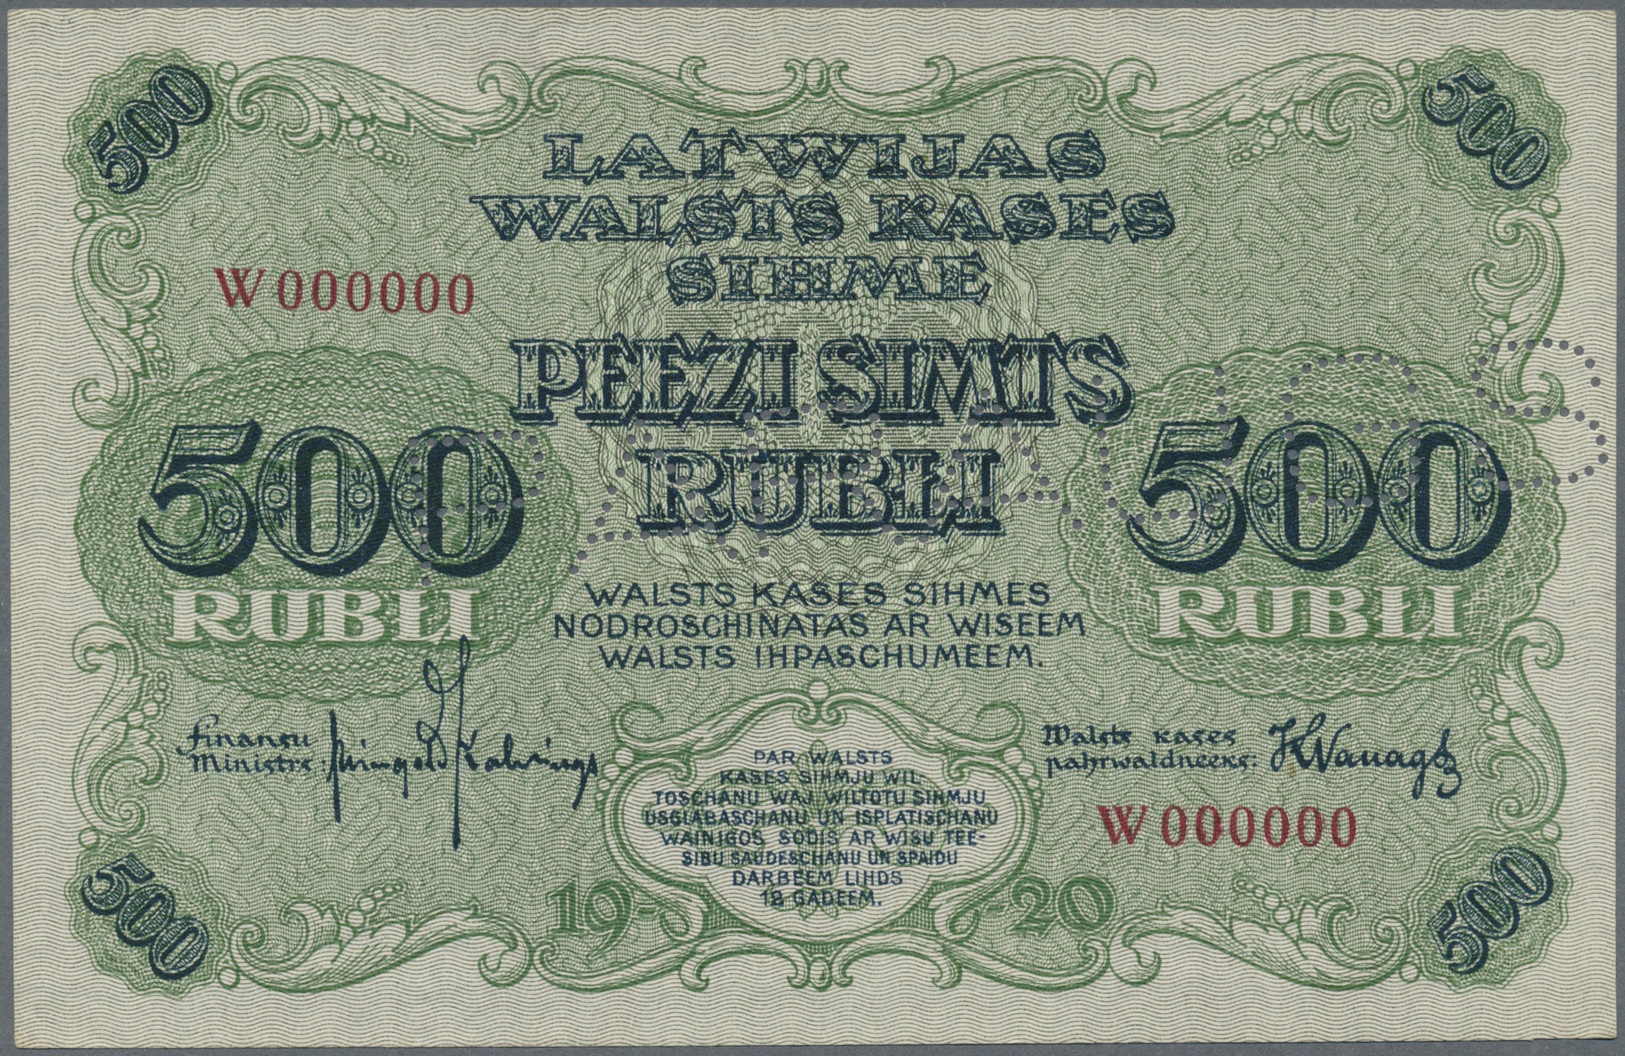 01438 Latvia / Lettland: Rare SPECIMEN Proof Of 500 Rubli 1920 P. 8cs, Uniface Print Of The Front, Zero Serial Numbers, - Latvia